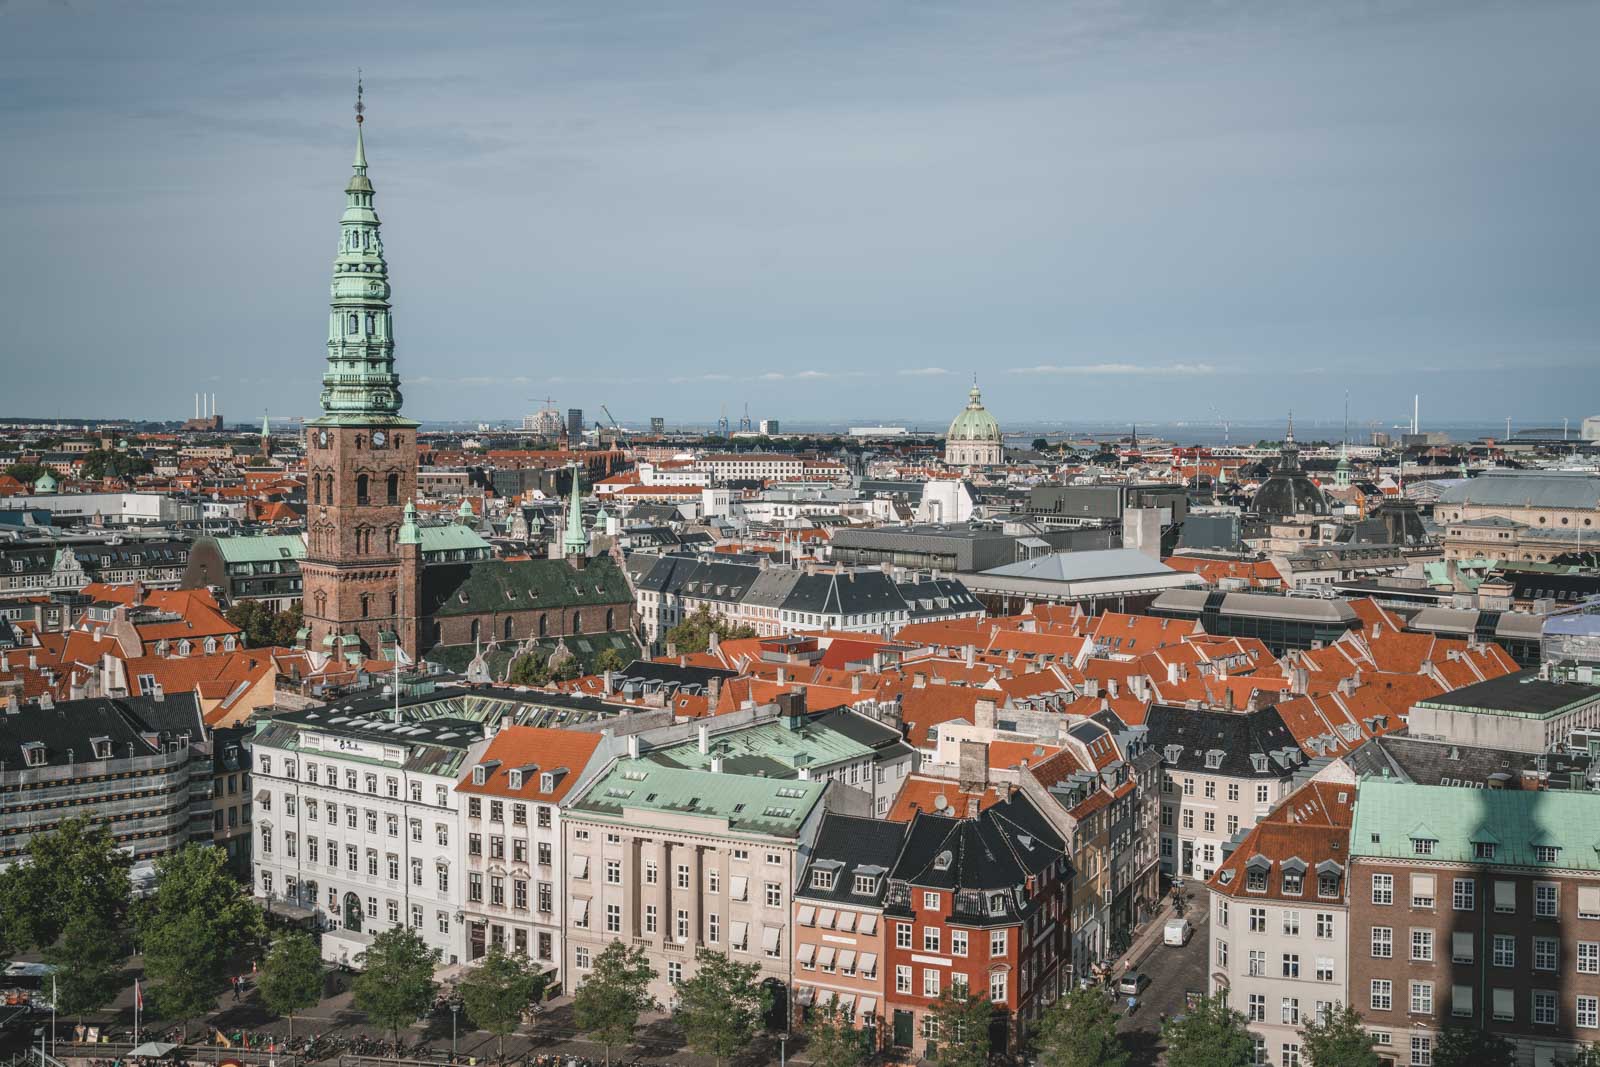 10 Most Popular Neighbourhoods in Copenhagen - Where to Stay in